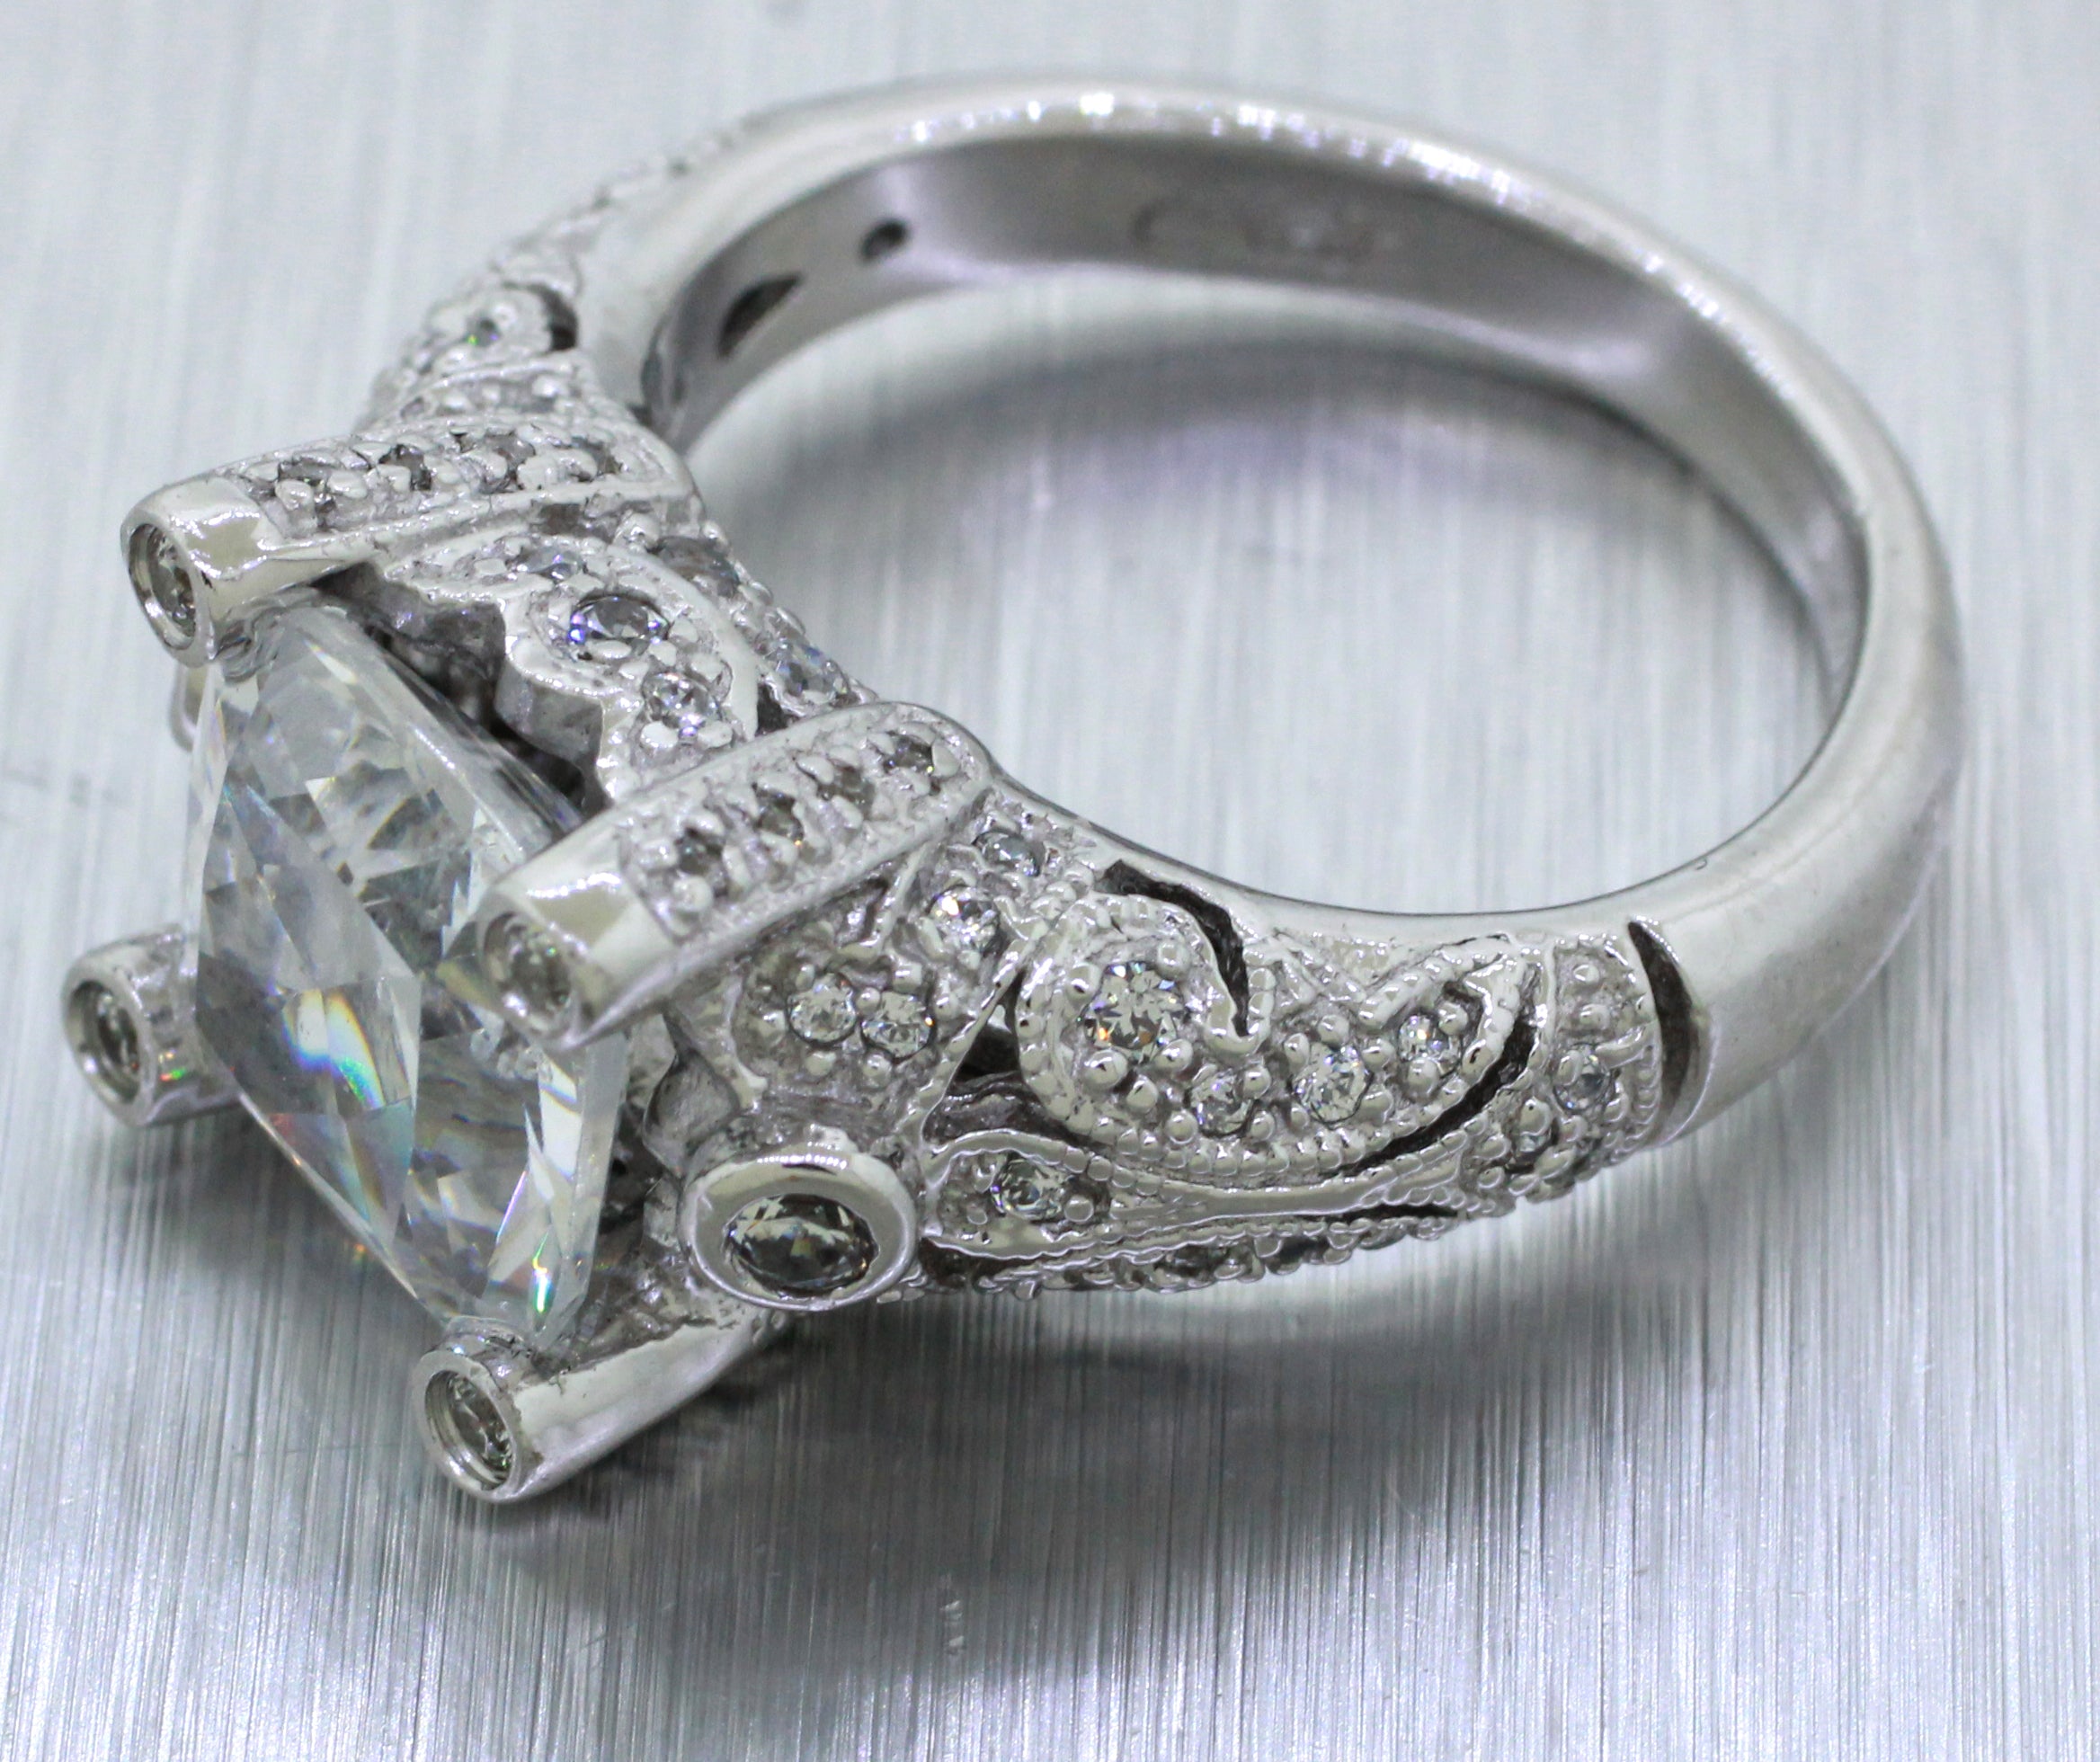 Buy Silver-Toned Rings for Women by Digital Dress Room Online | Ajio.com